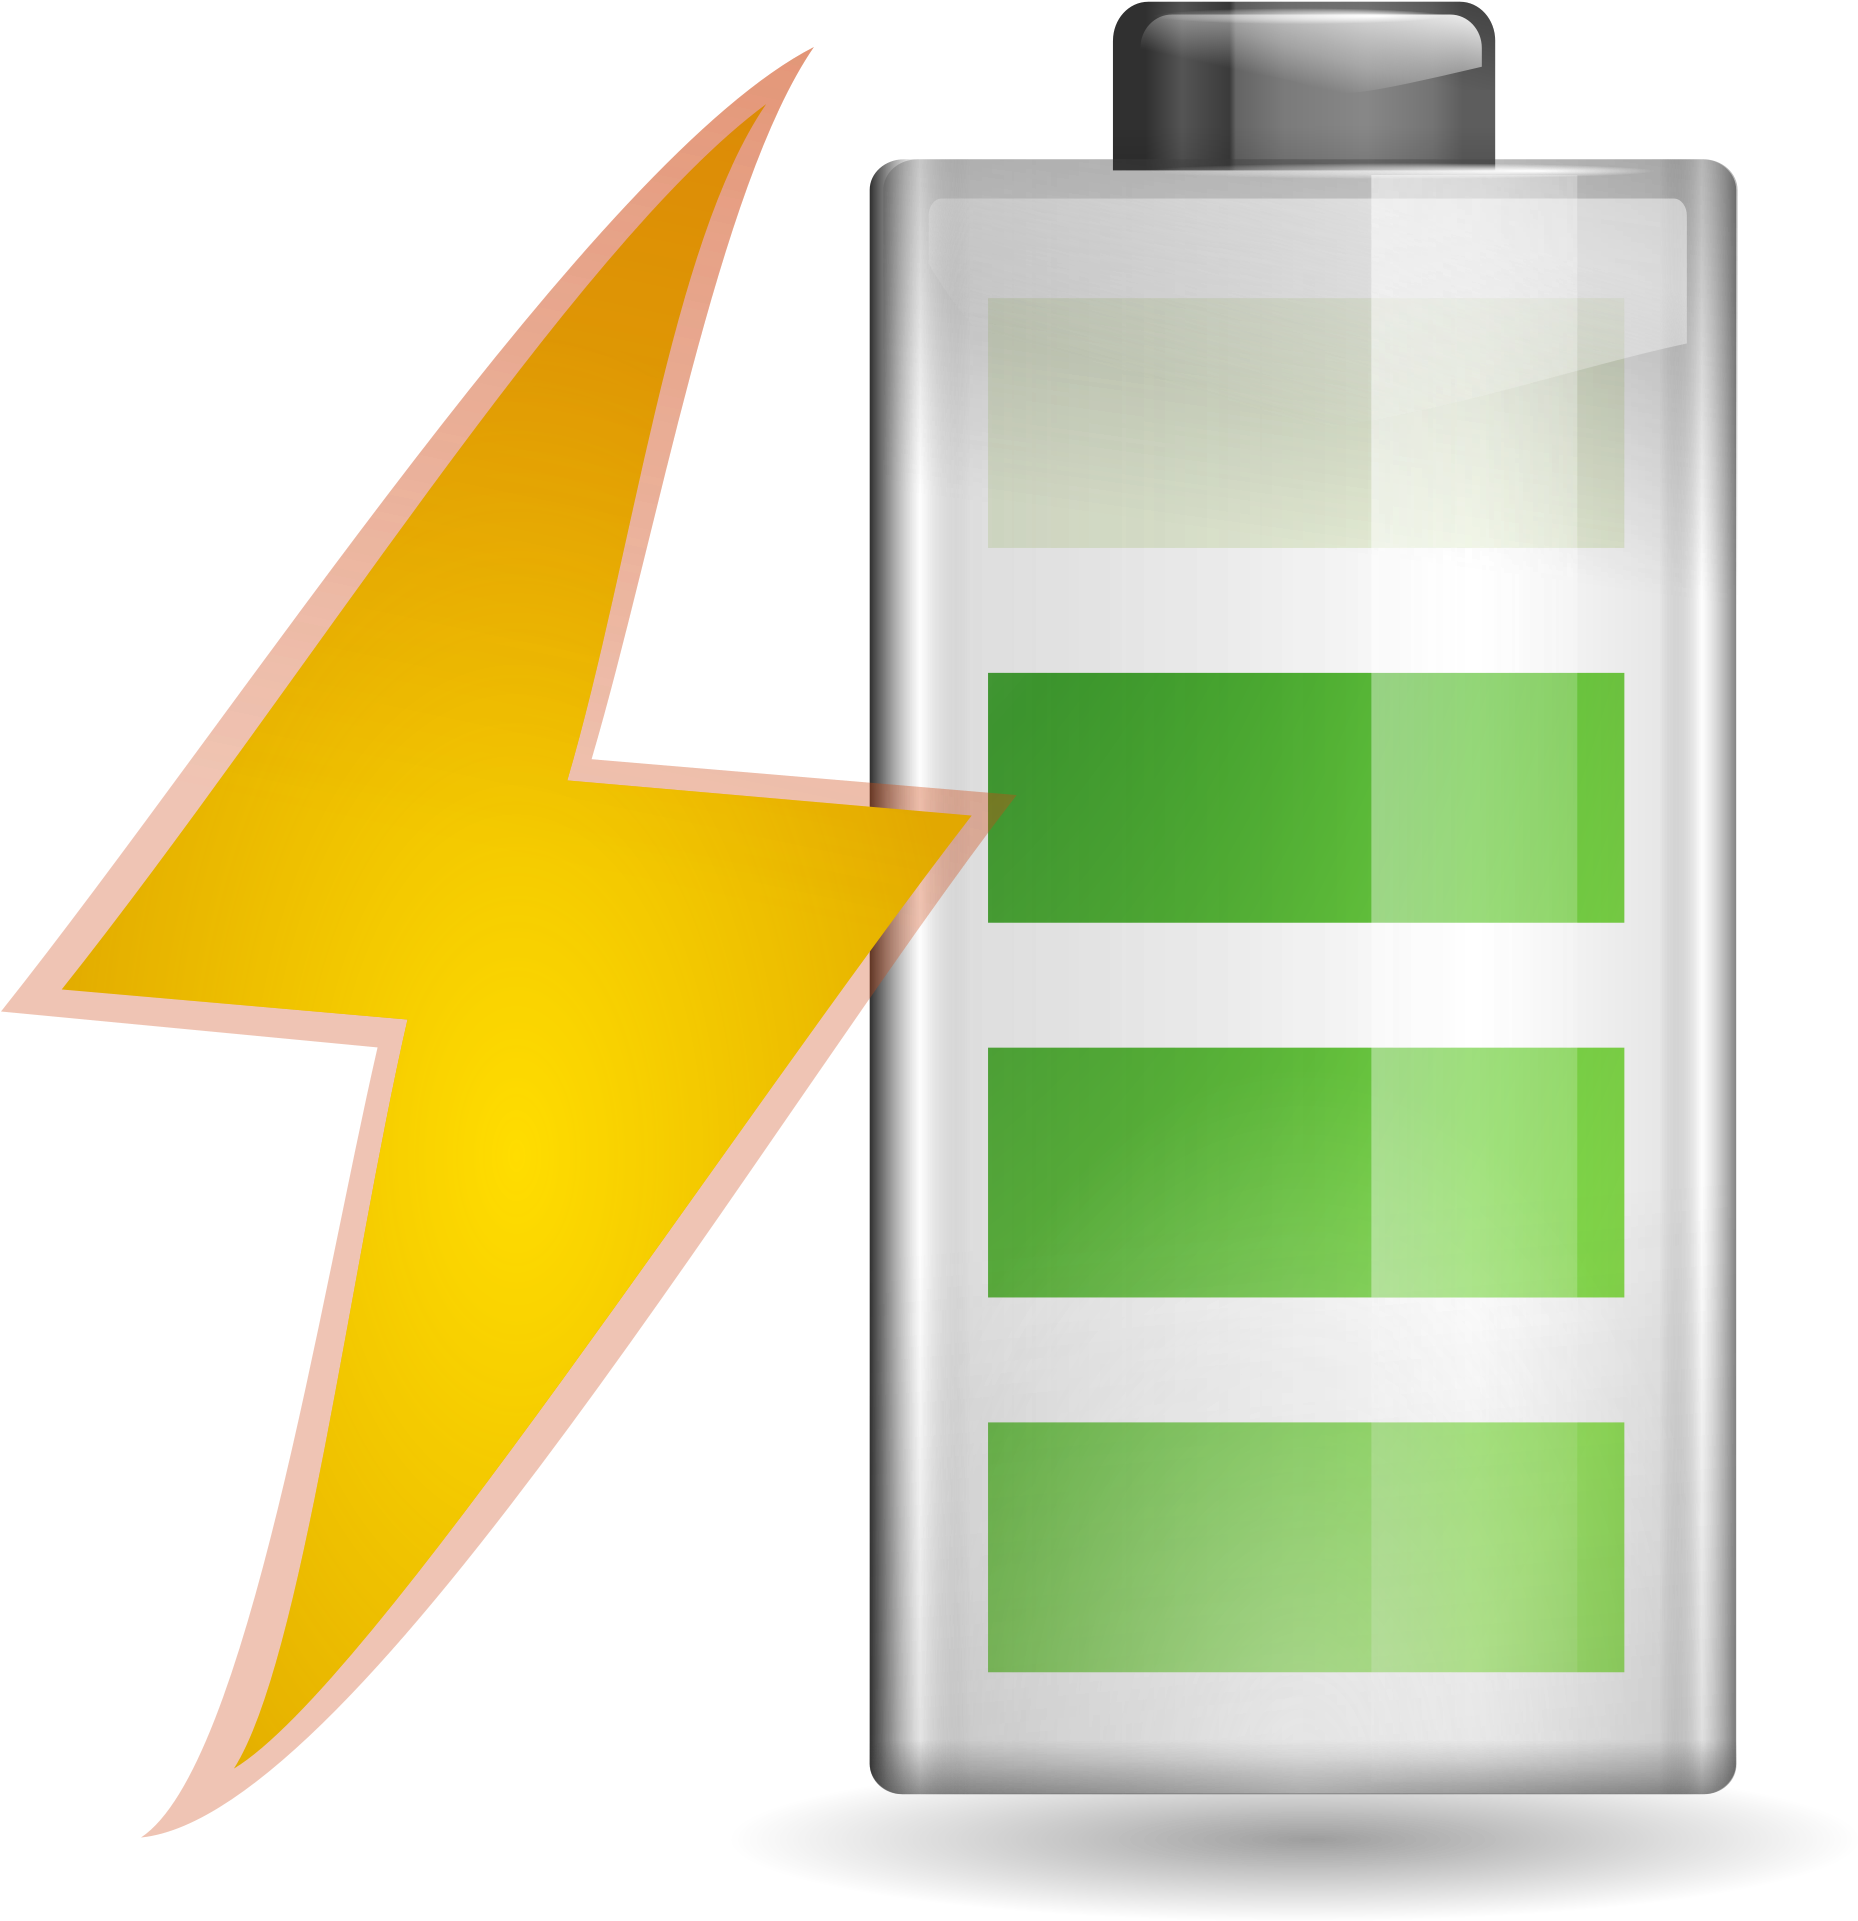 A Battery With A Lightning Bolt